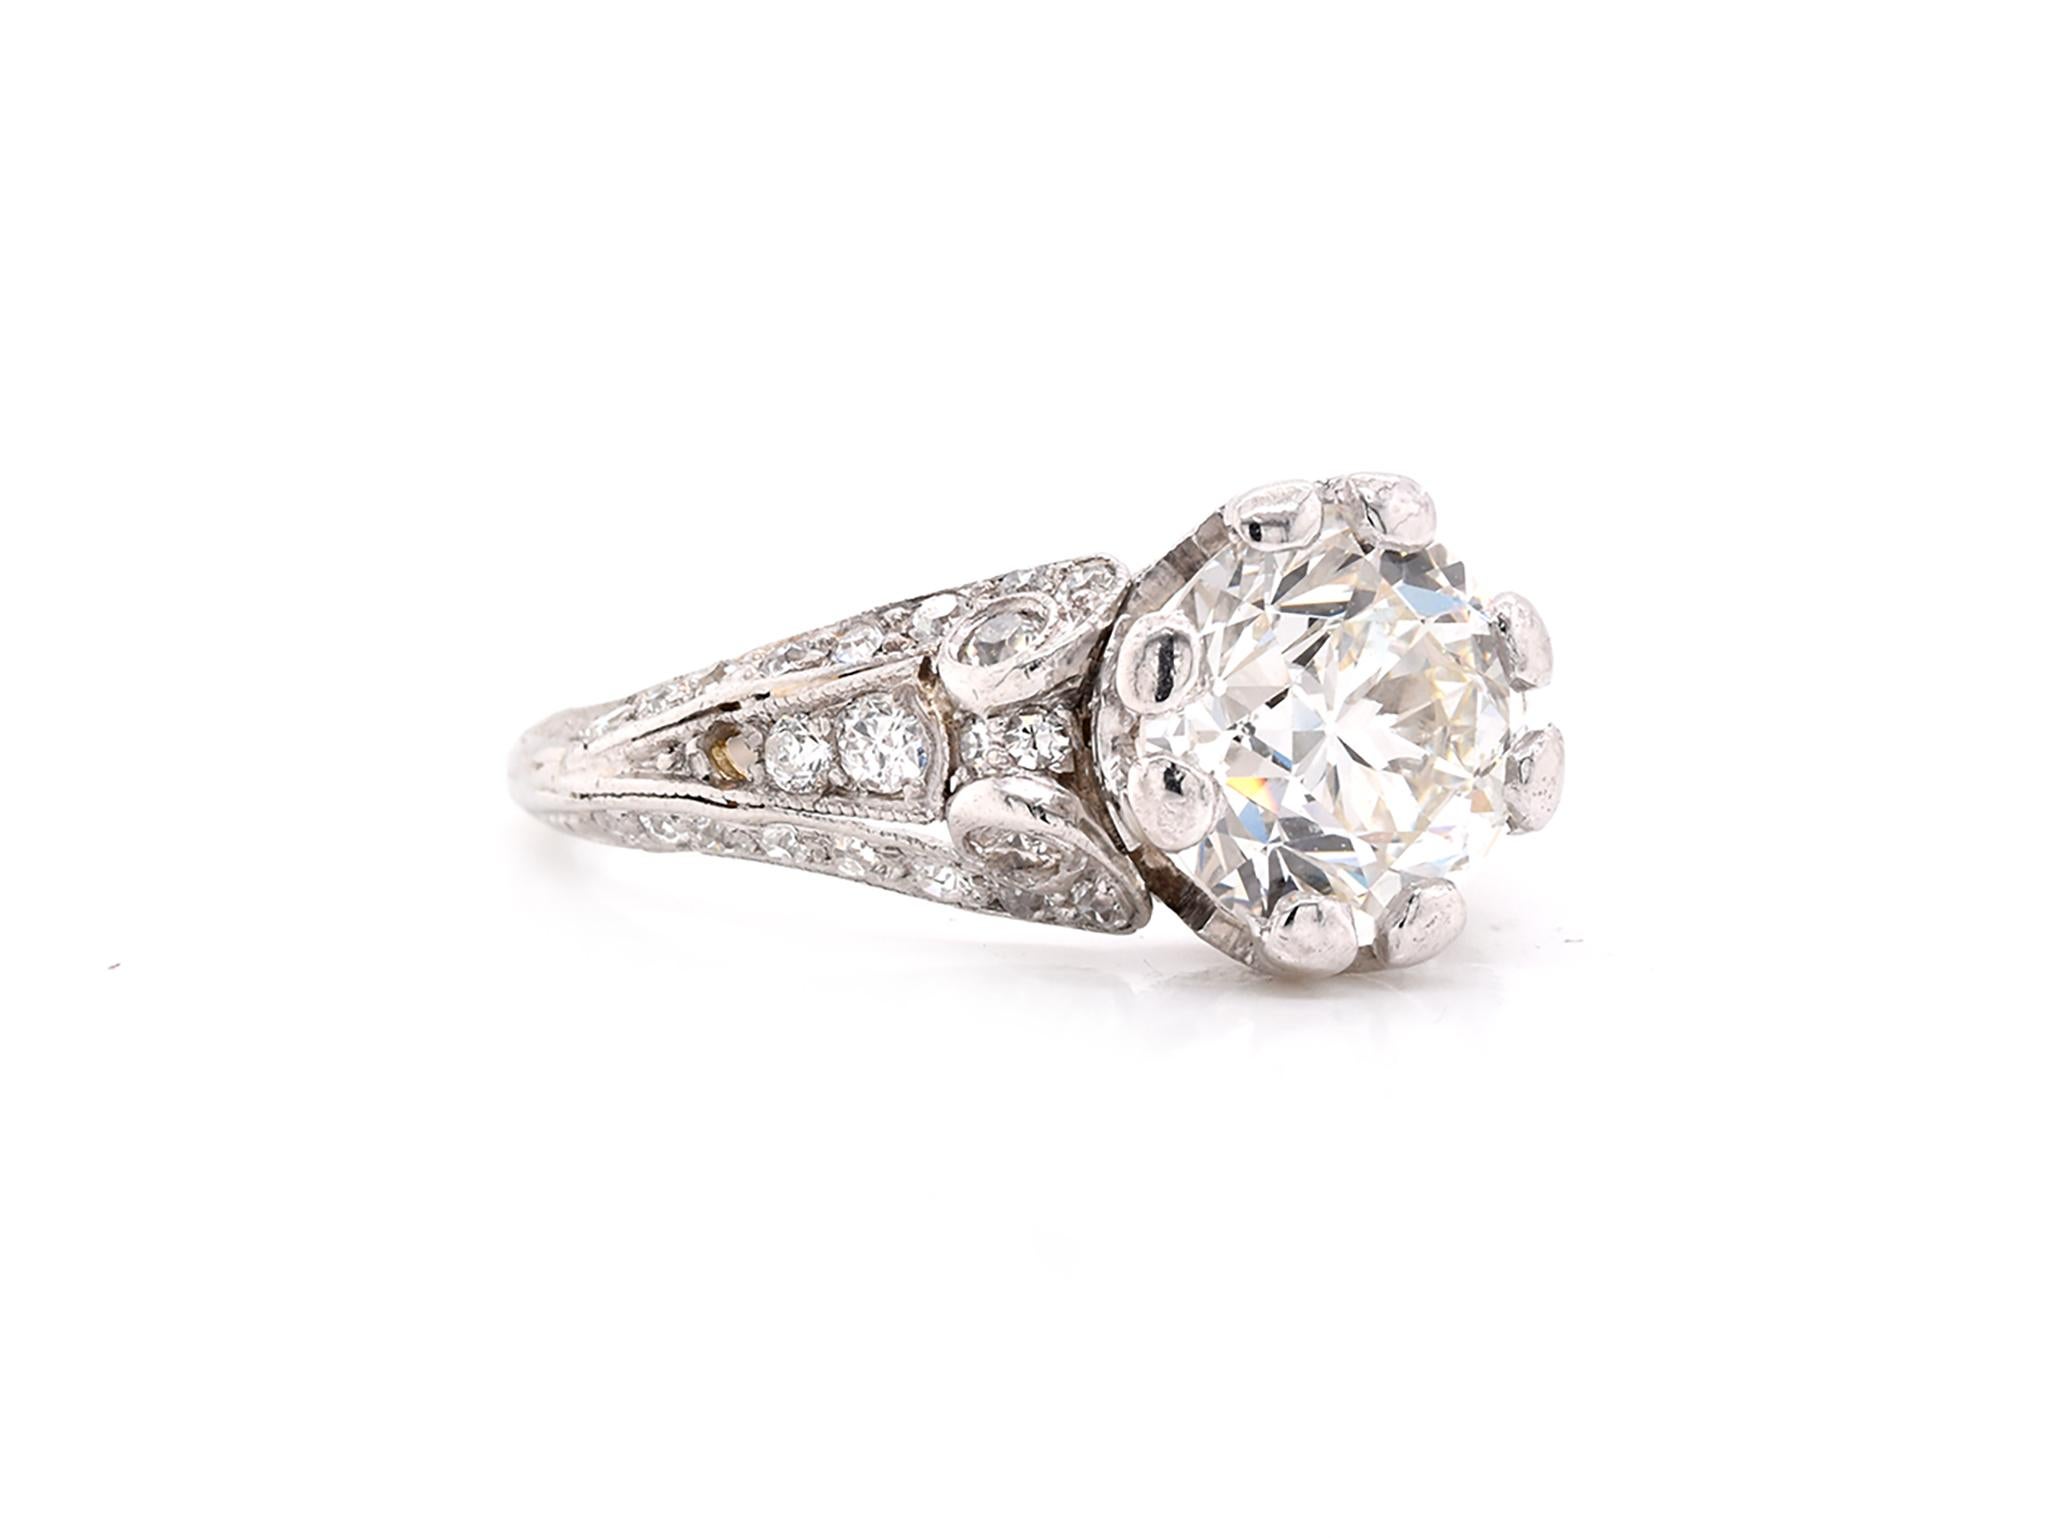 Platinum Vintage Art Deco Style Diamond Engagement Ring
 
Material: platinum
Center Diamond: 1 round European cut = 2.10ct
Color: H
Clarity: SI1
Diamonds: 40 round cut = .50cttw
Color: H
Clarity:  SI1
Ring Size: 7 (please allow up to 2 additional